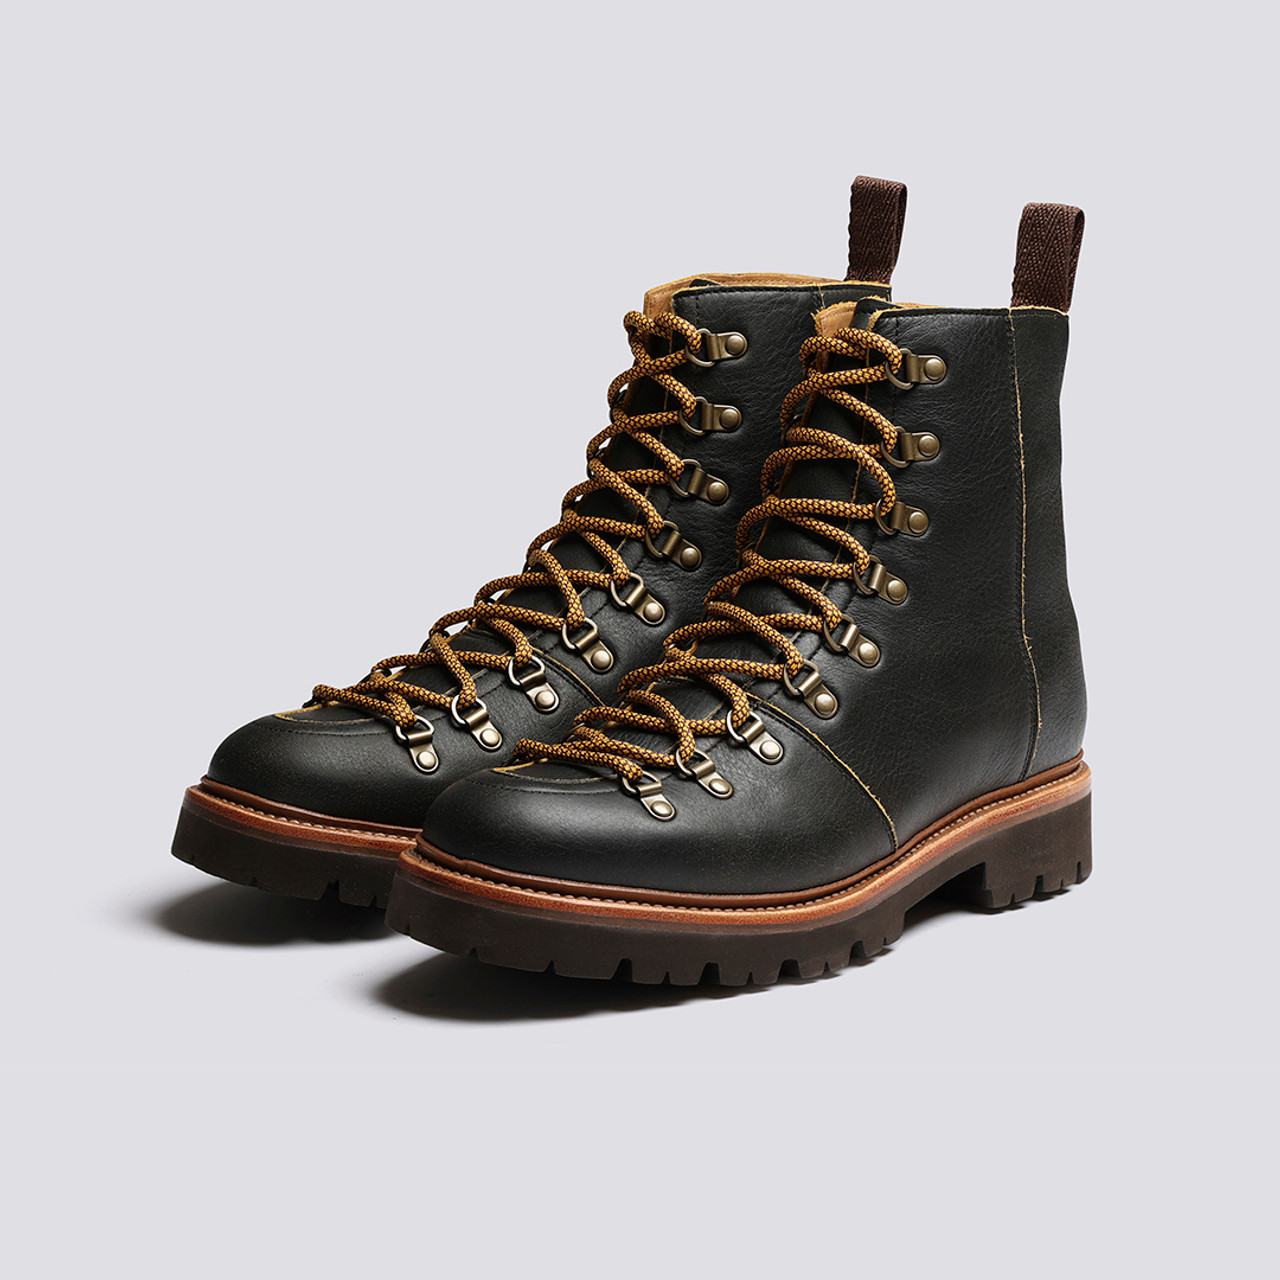 Brady | Hiker Boots for Men in Brown Vintage Softie | Grenson